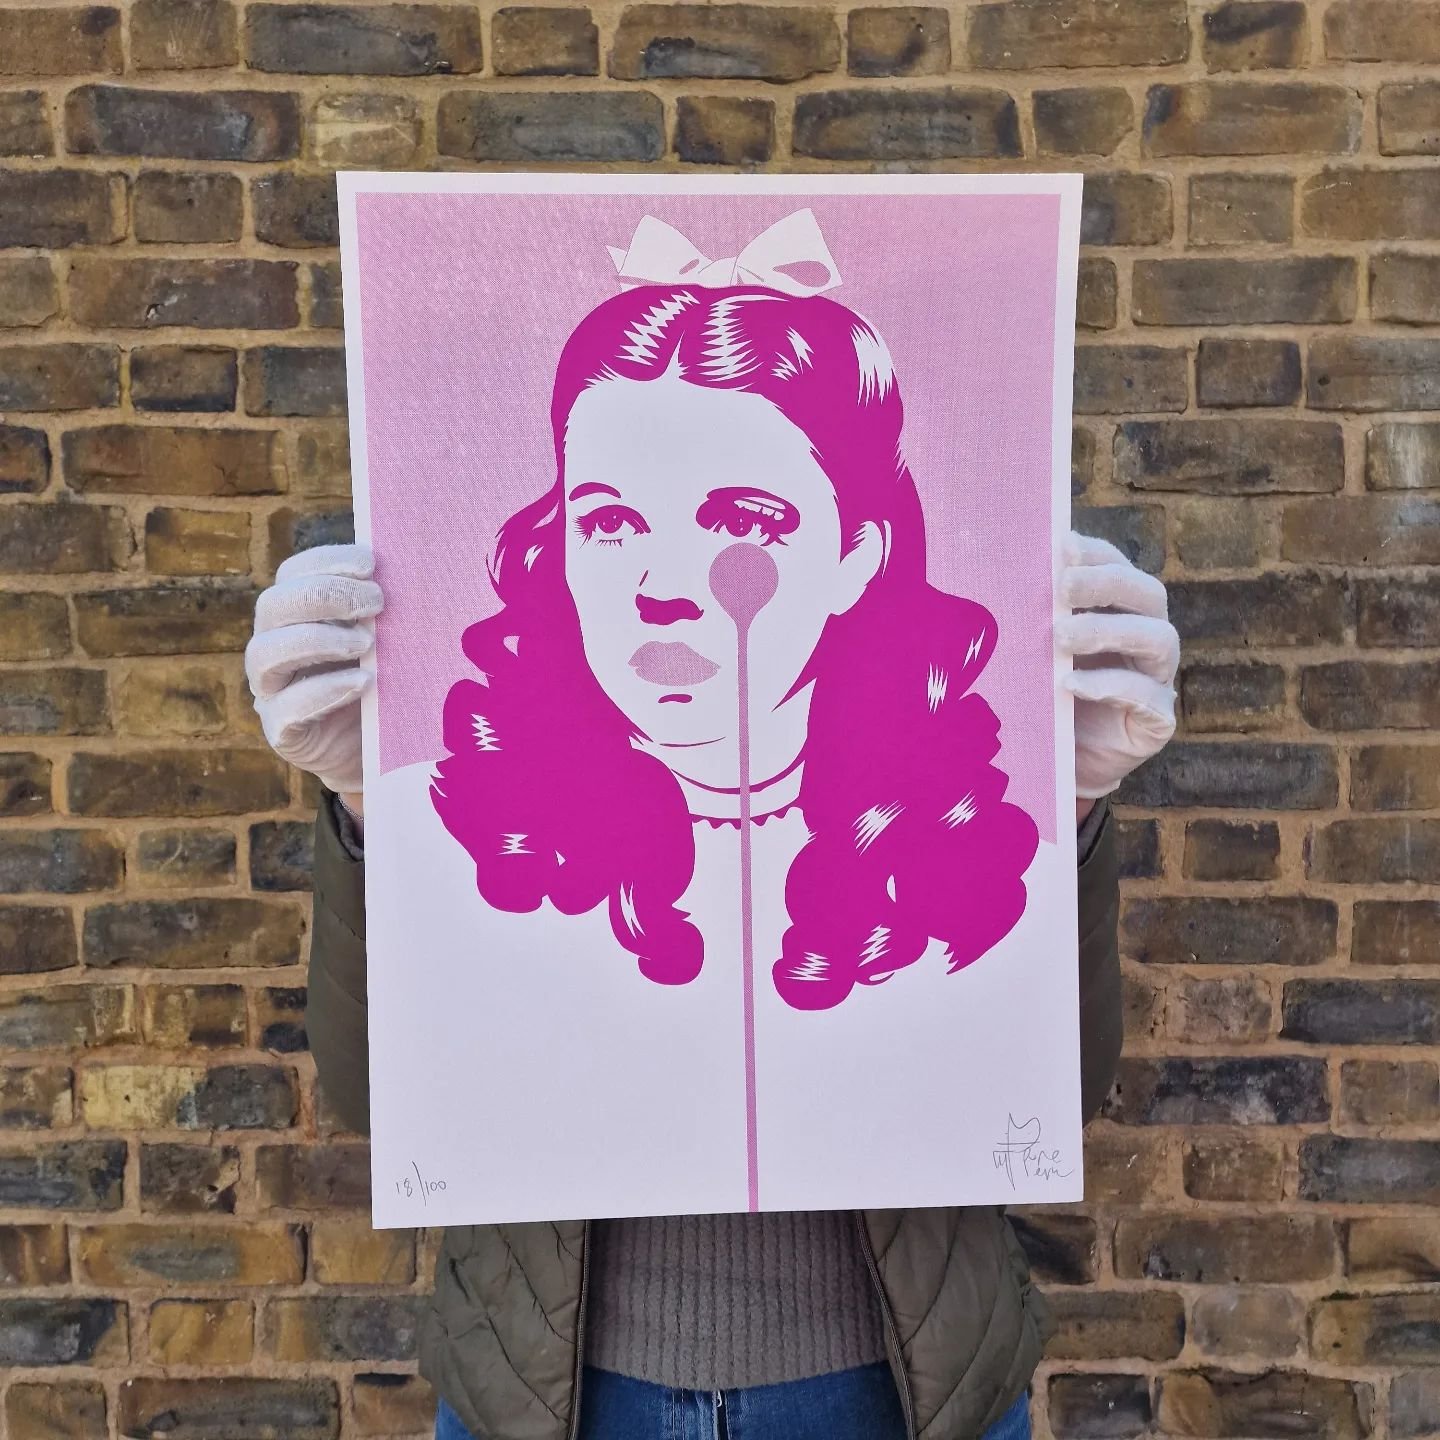 @xennial_gallery 

&quot;Dorothy&quot;

Edition number 18/100, by artist @pureevilgallery

Print size 350 x 500mm

#xennialgallery #bexleyvillage #londongallery #artcollection #limitededitionprints #artcollector #artoninstagram #art #framedart #artpr